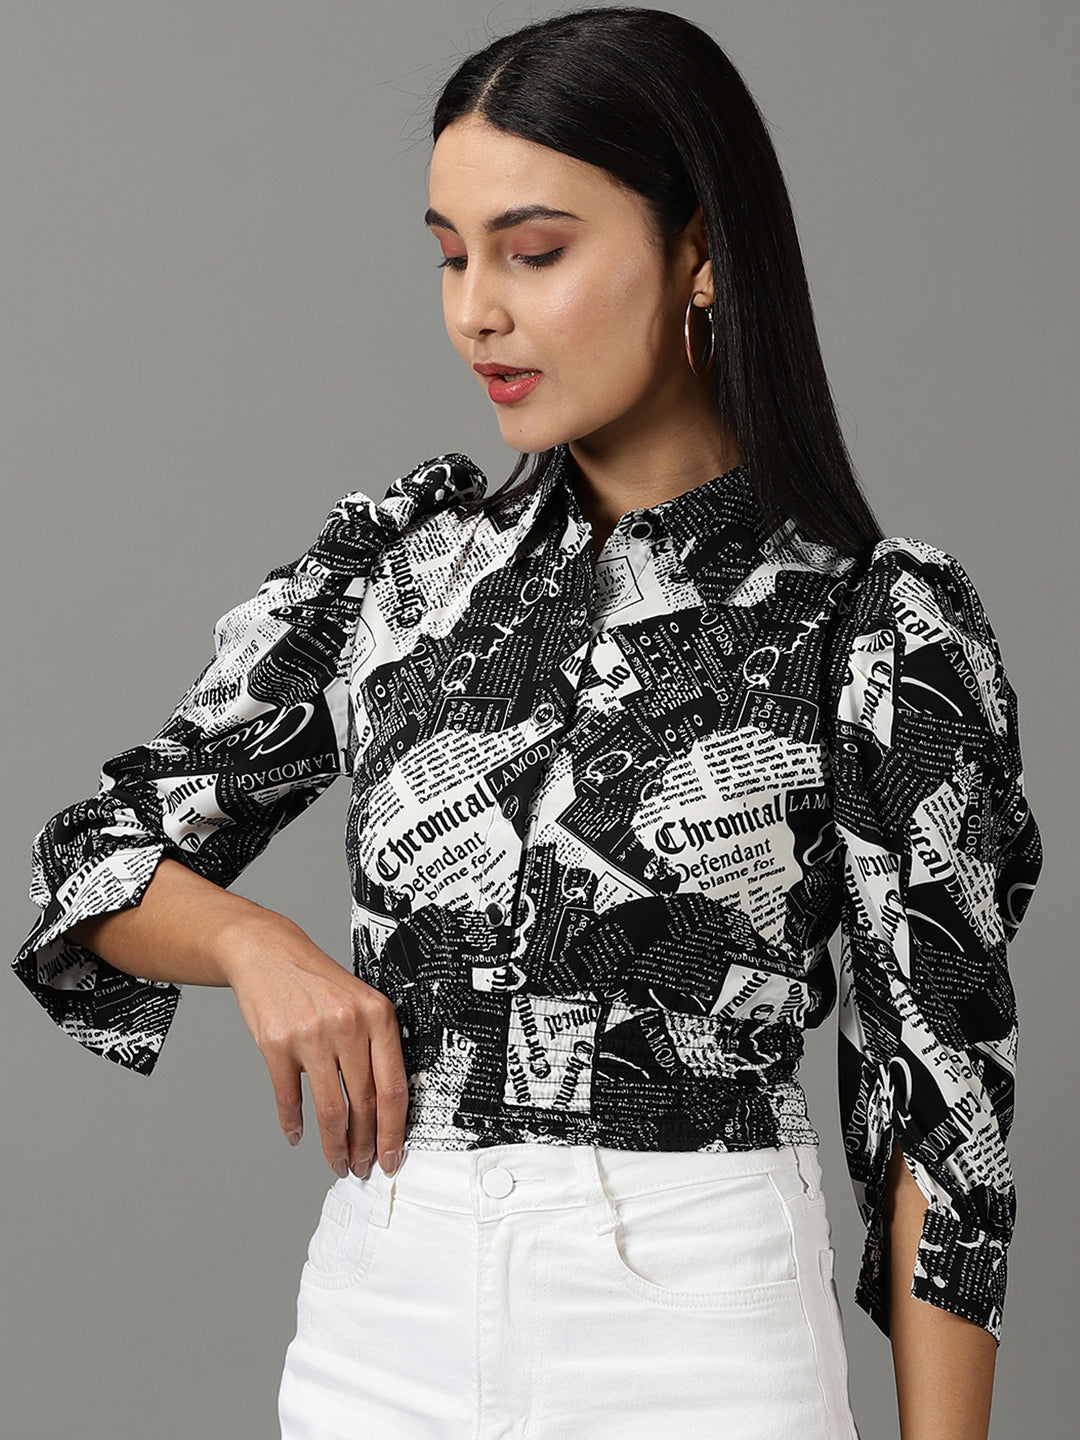 Women's Black Printed Shirt Style Crop Top